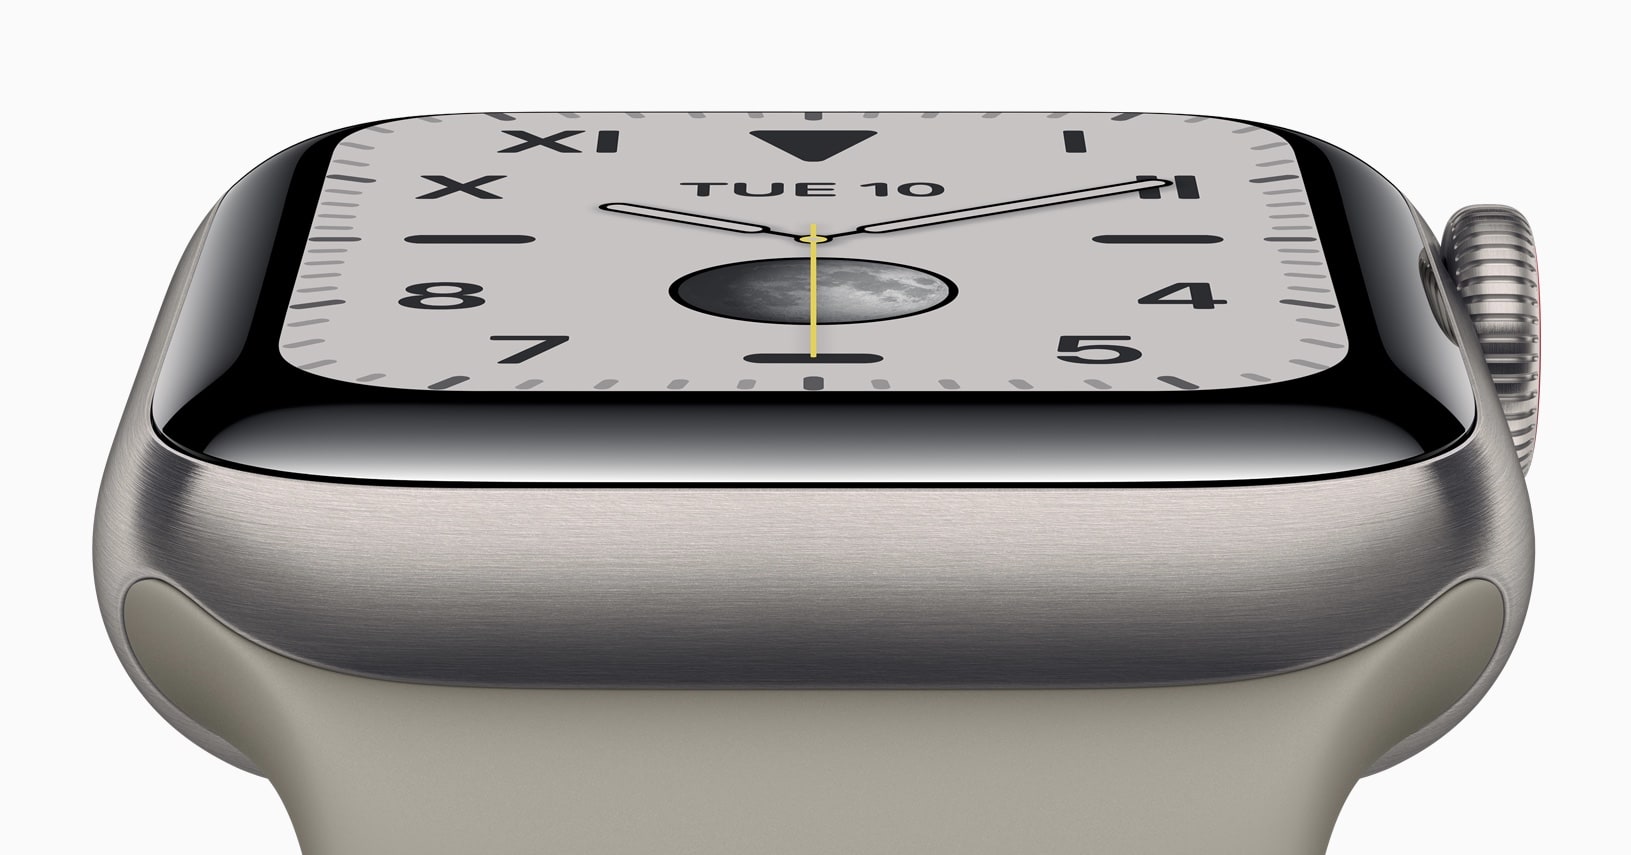 The titanium Apple Watch Series 5 looks terrific